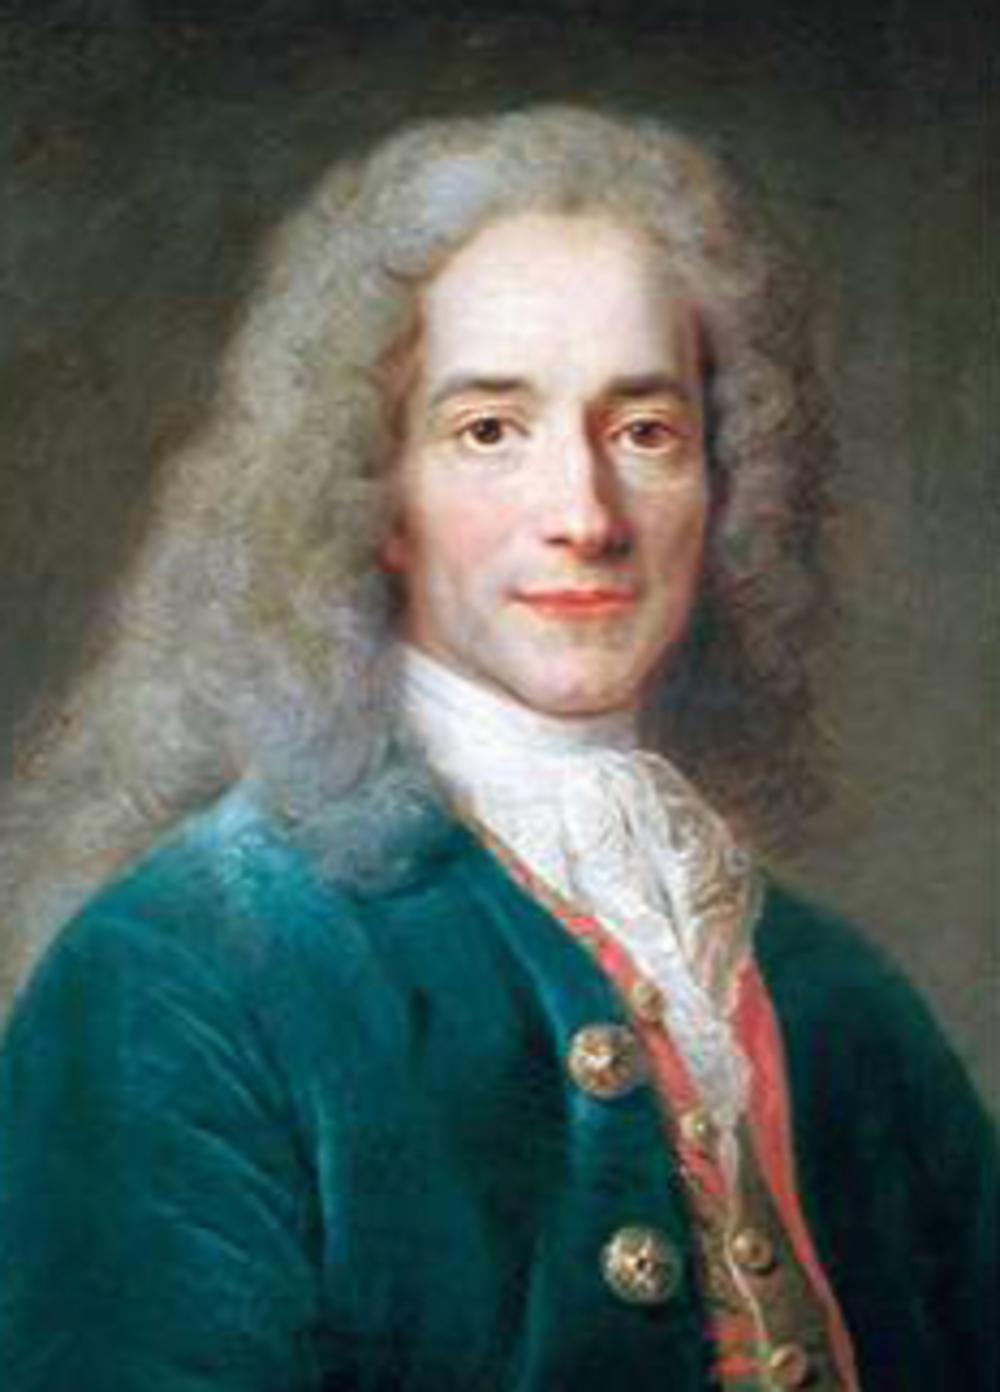 François-Marie Arouet, Voltaire